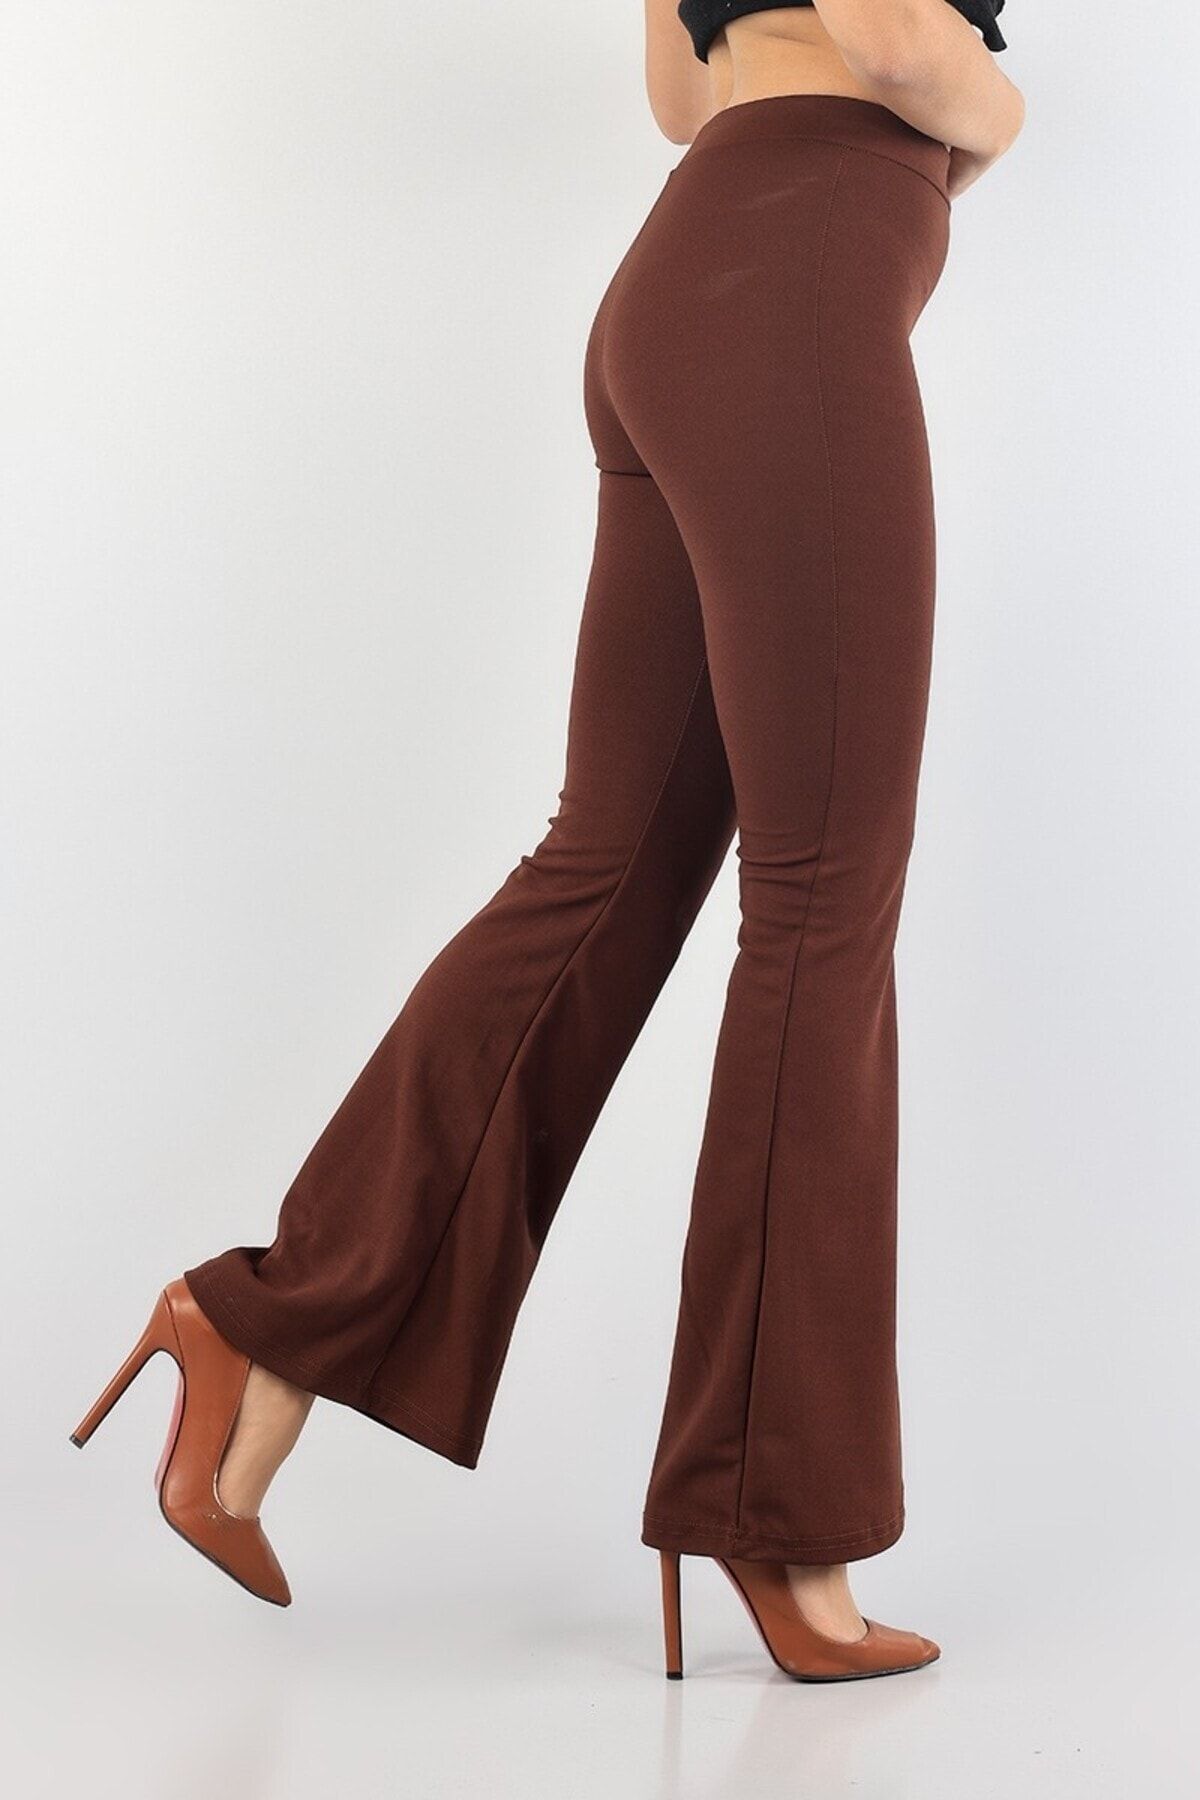 EDAMODA Women's Brown High Waist Spanish Tights with Cuffed Crepe Fabric -  Trendyol